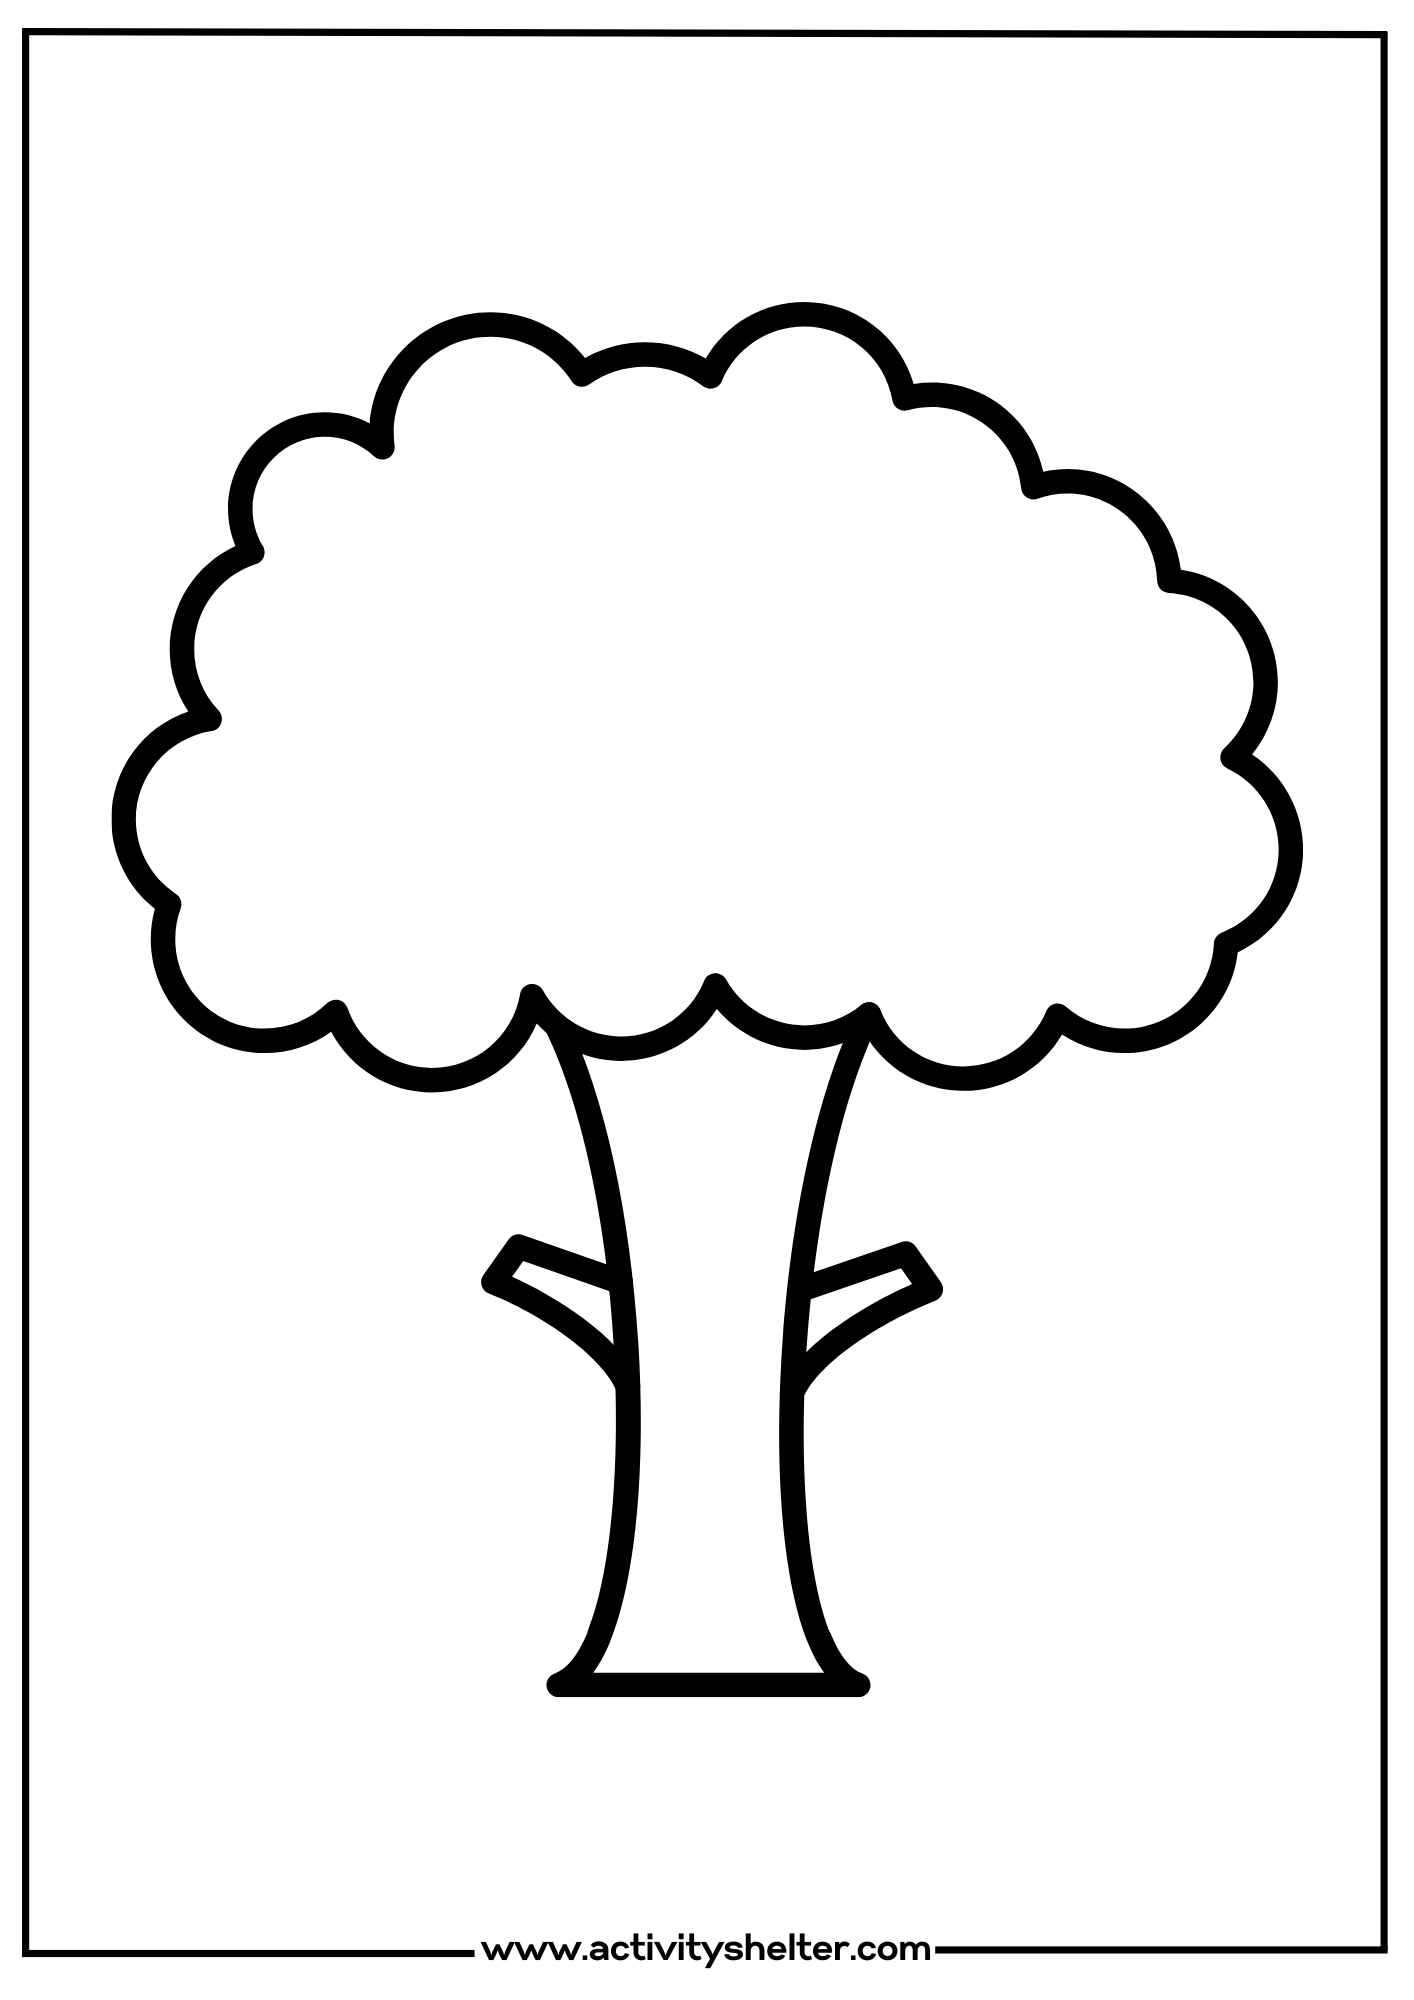 printable tree template